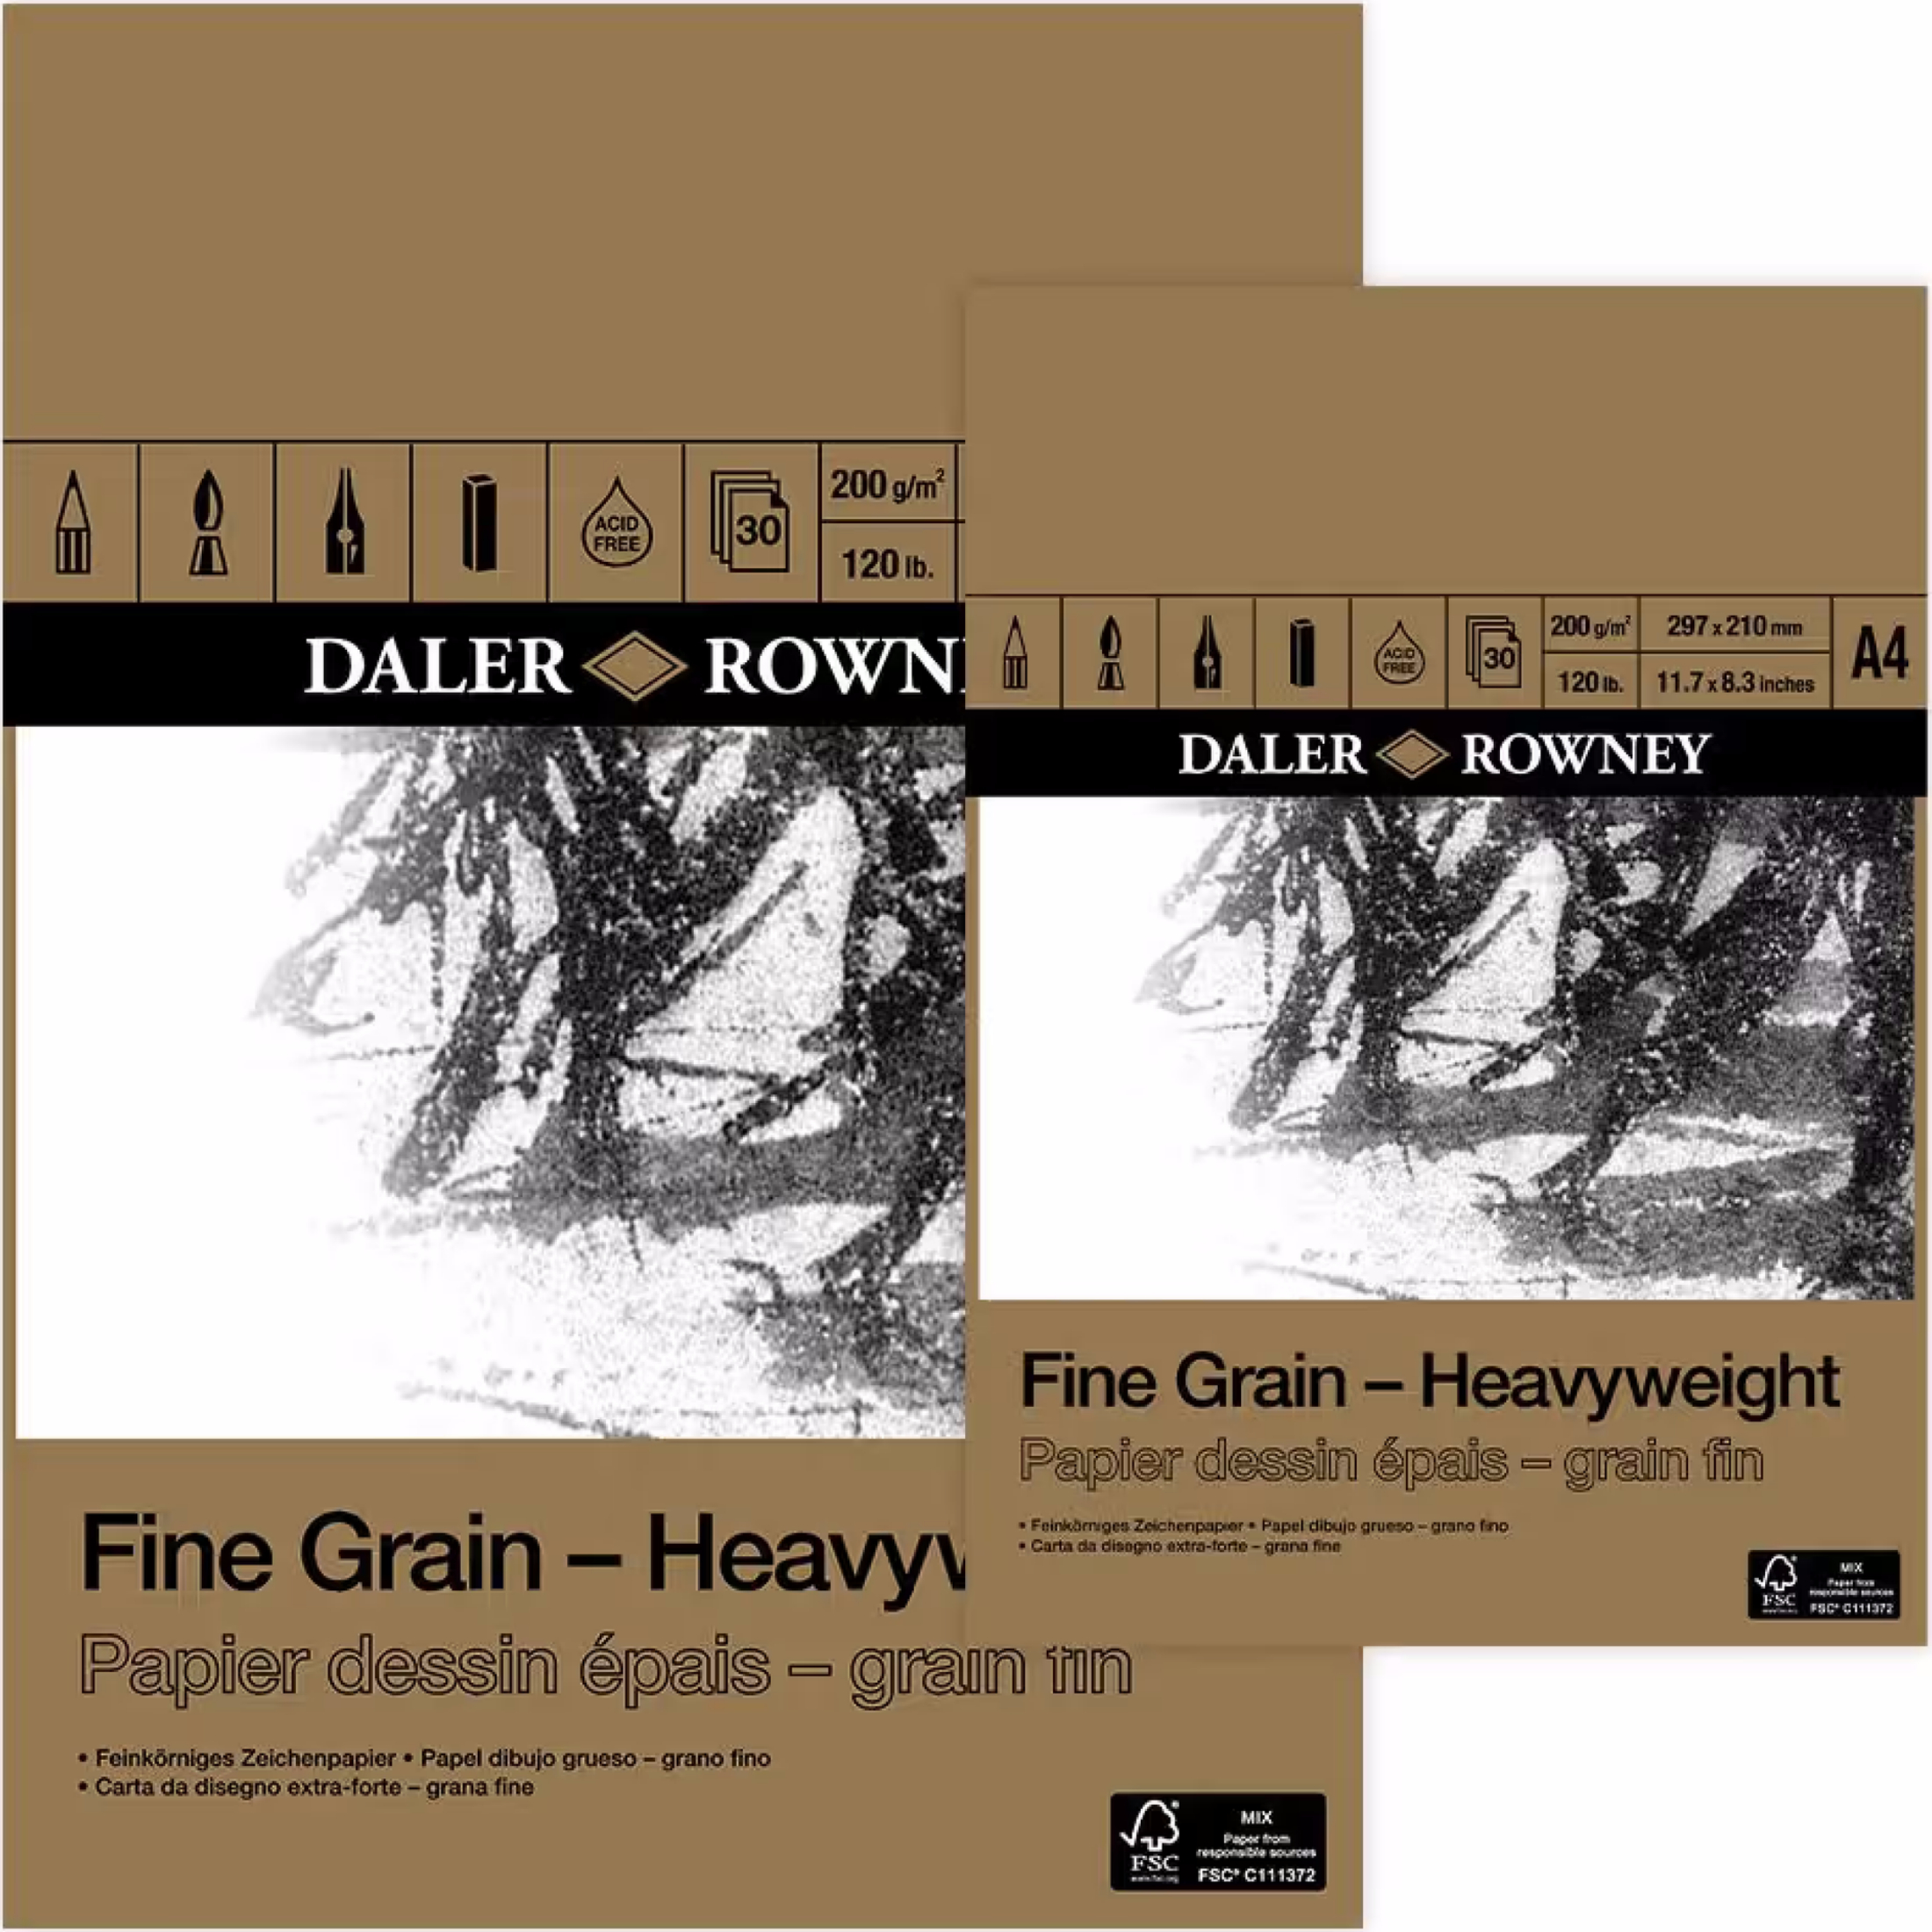 Bloco Papel Fine Grain HeavyWeight 200gm2 daler rowney